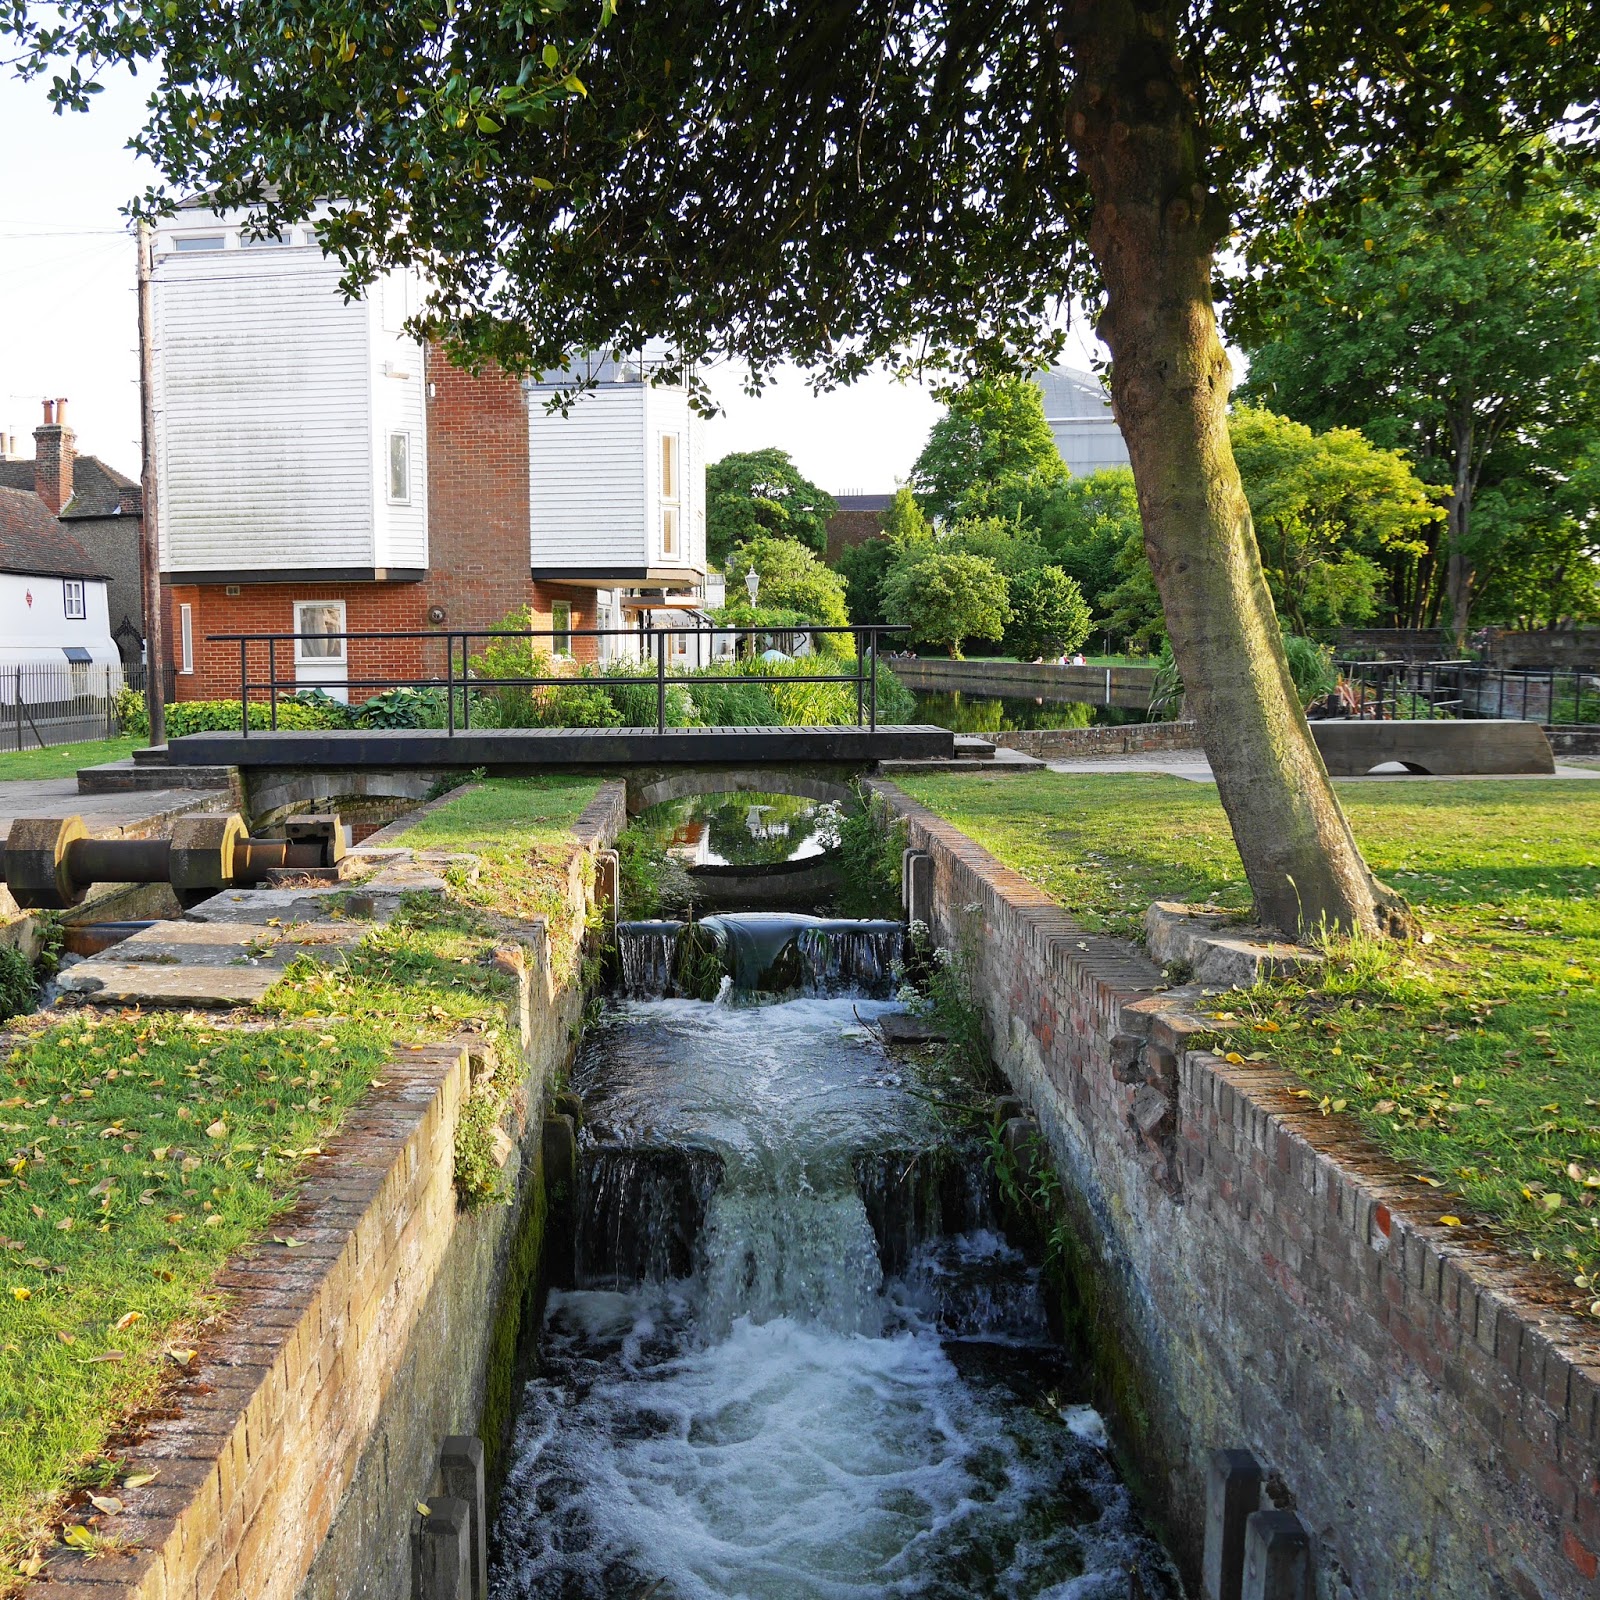 Abbots Mill Garden in Canterbury, Kent